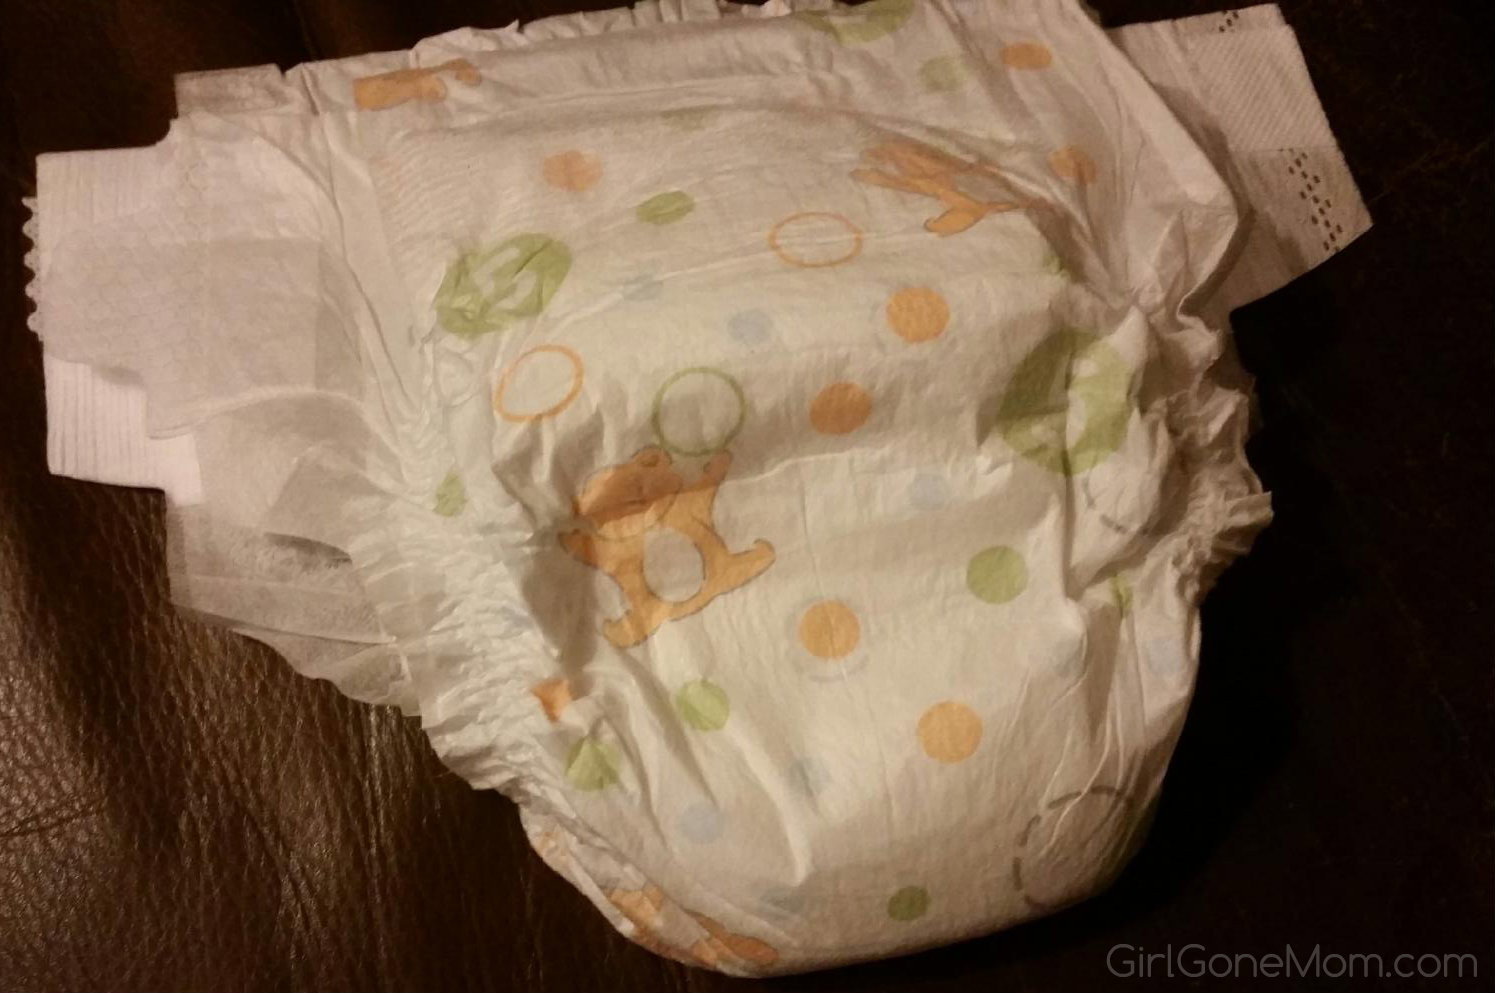 Parent's Choice Diapers